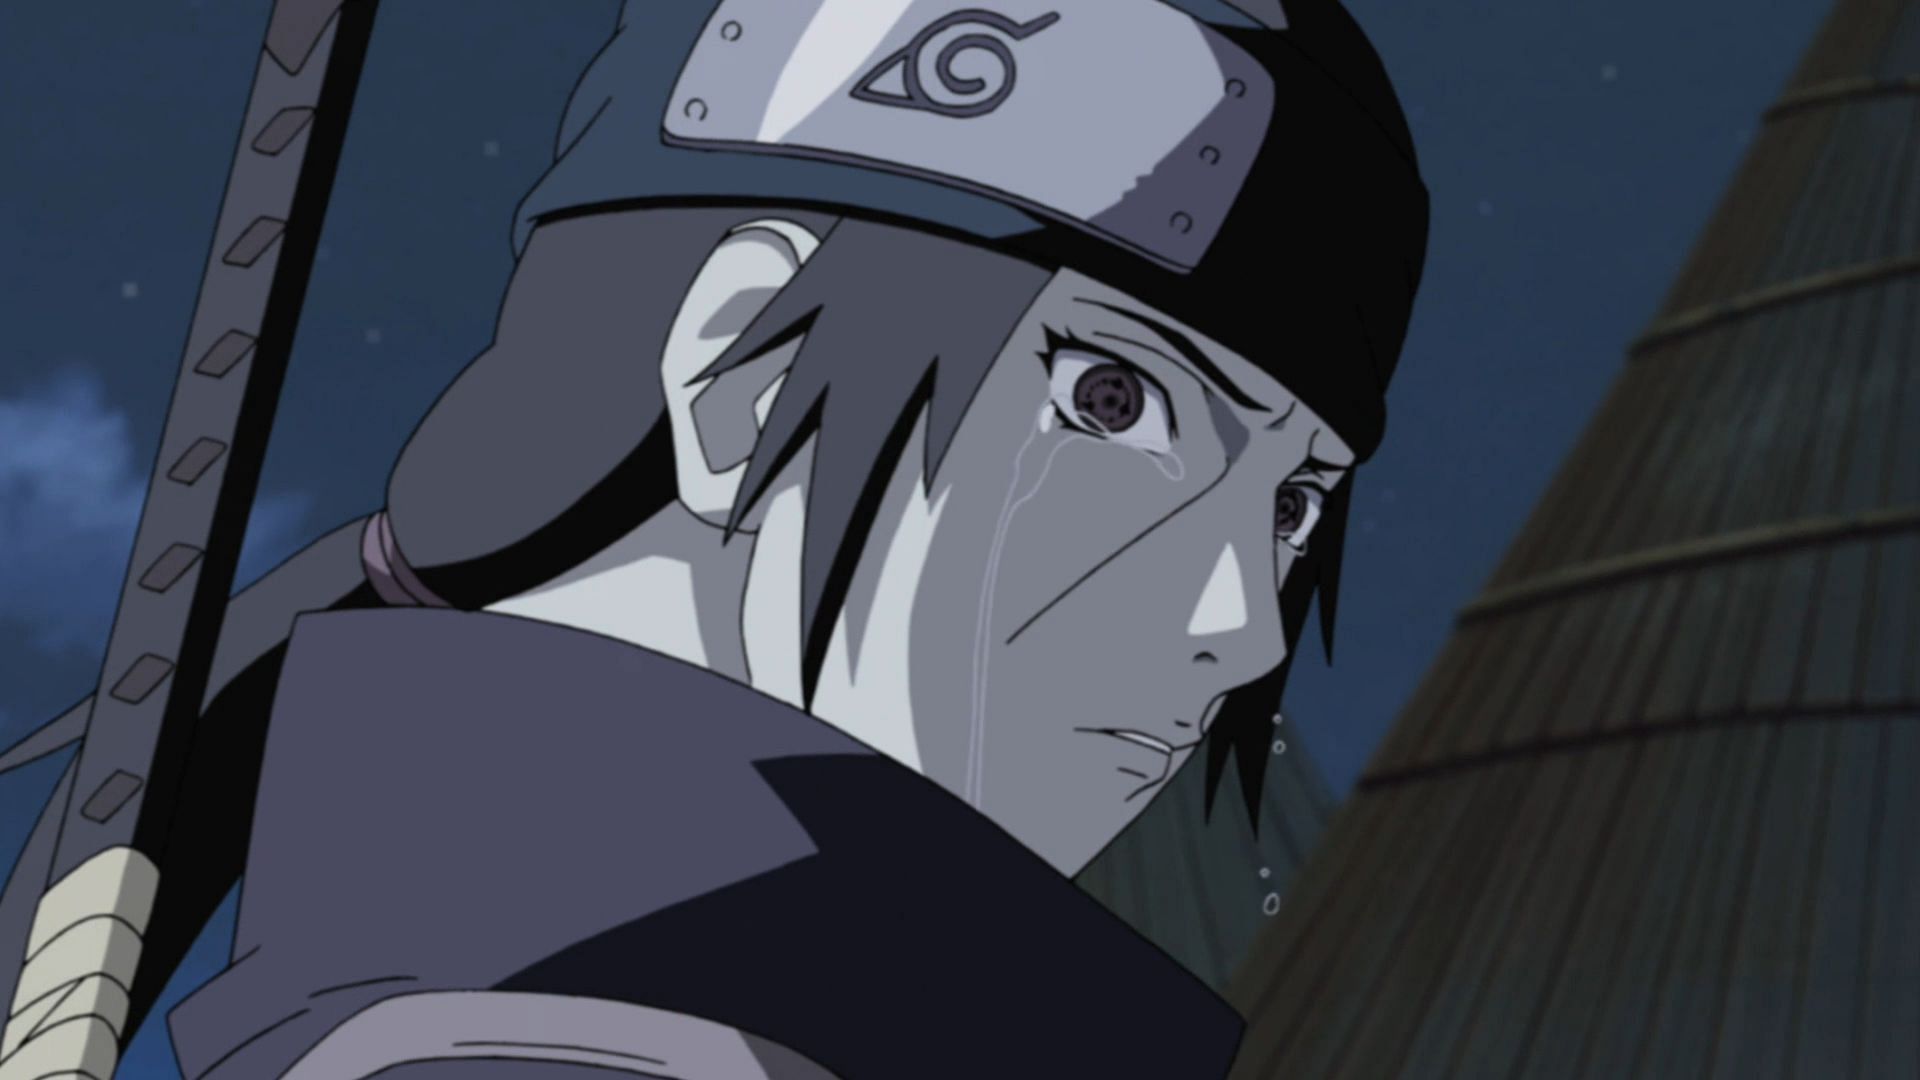 Itachi Uchiha as seen in Naruto (Image via Studio Pierrot)